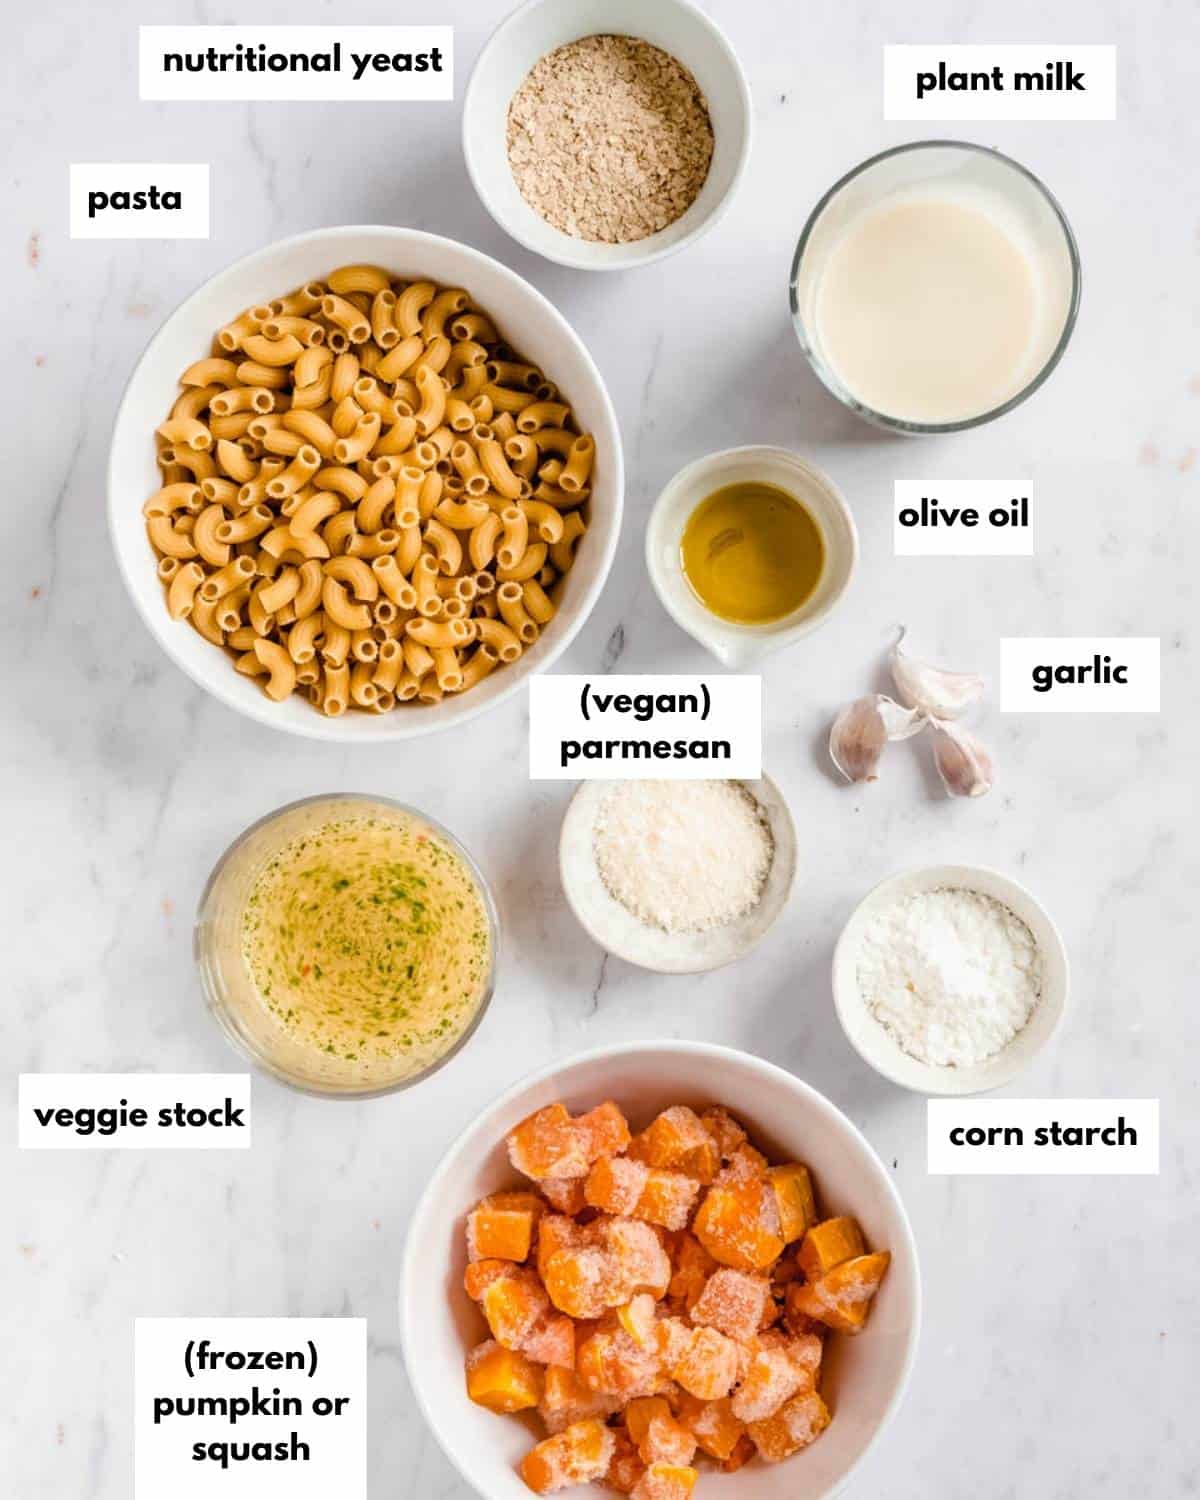 all ingredients for mac and cheese: pasta, nutritional yeast, plant milk, olive oil. garlic, vegan parmesan, corn starch, veggie stock, frozen pumpkin or squash.